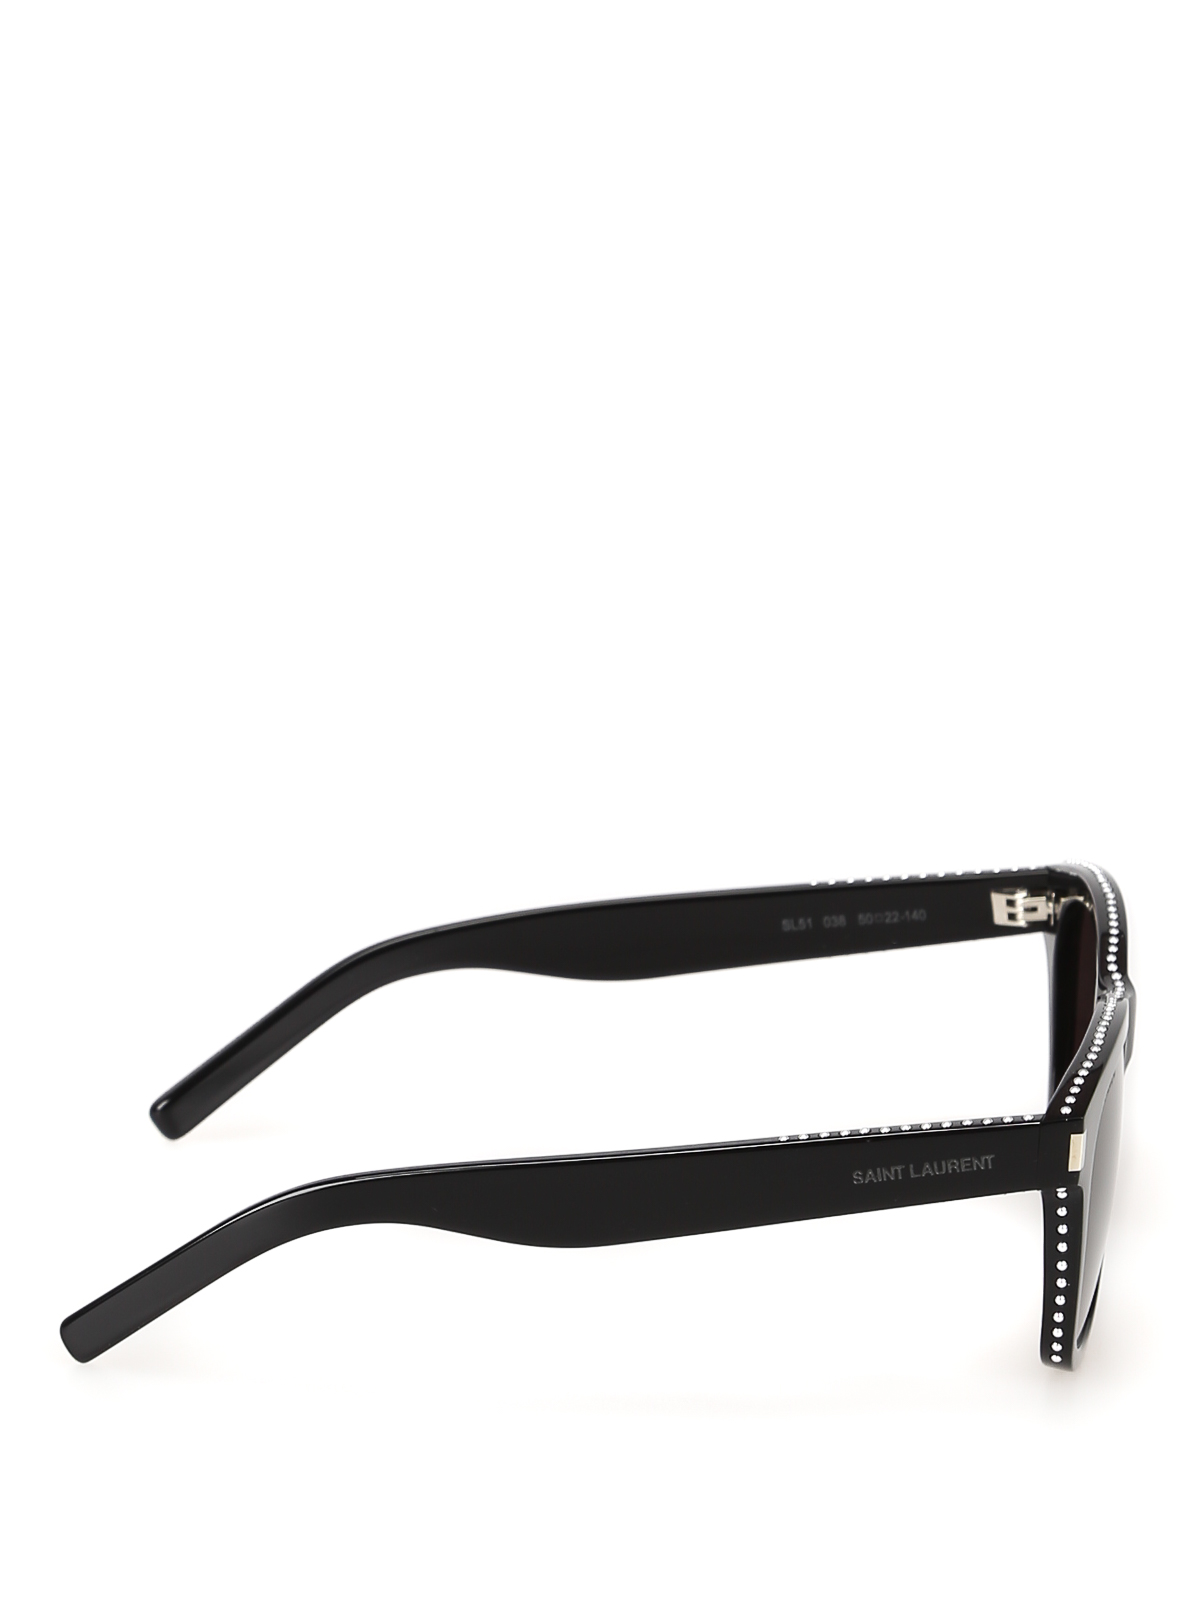 SAINT LAURENT PARIS Women&#39;s Sunglasses Black NIB Authentic | eBay